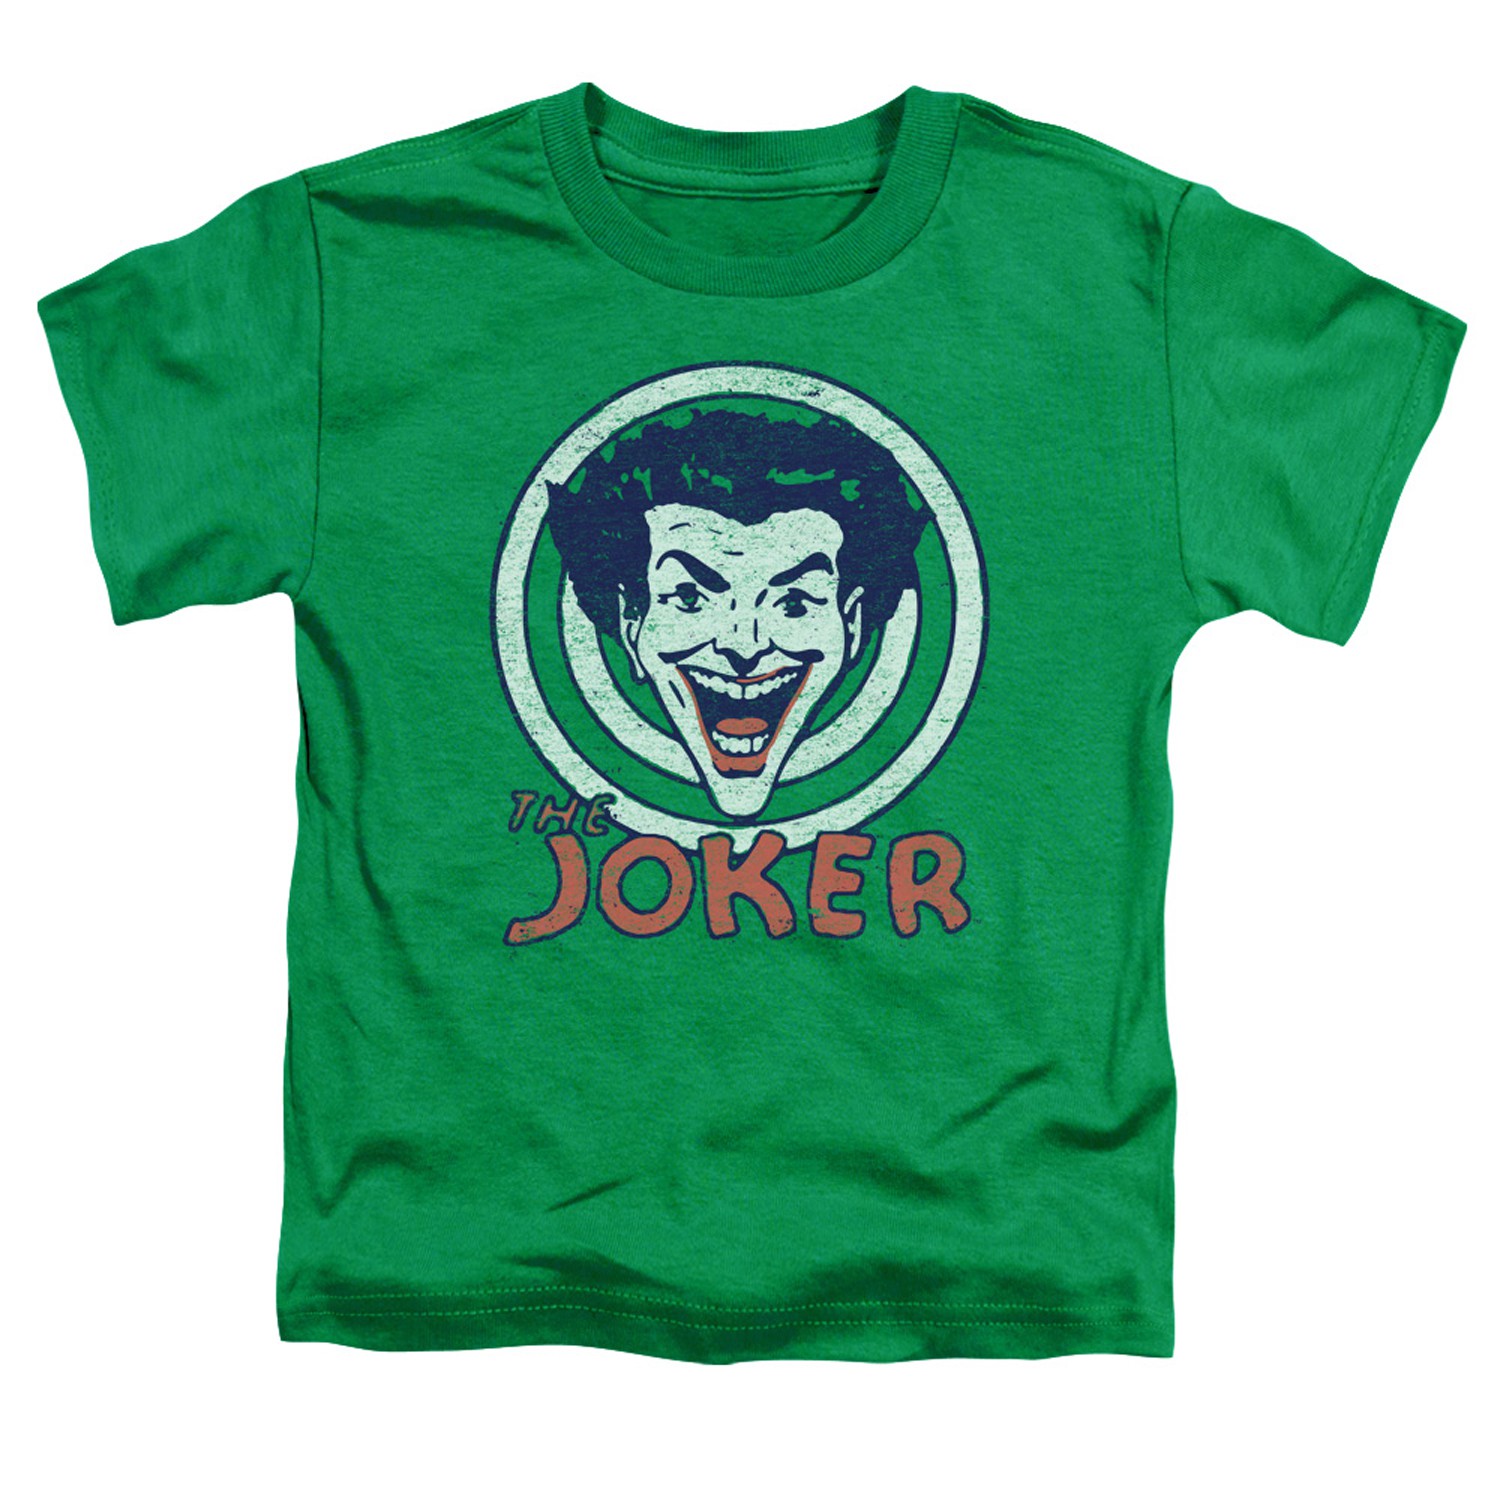 The Joker Toddlers Tshirt